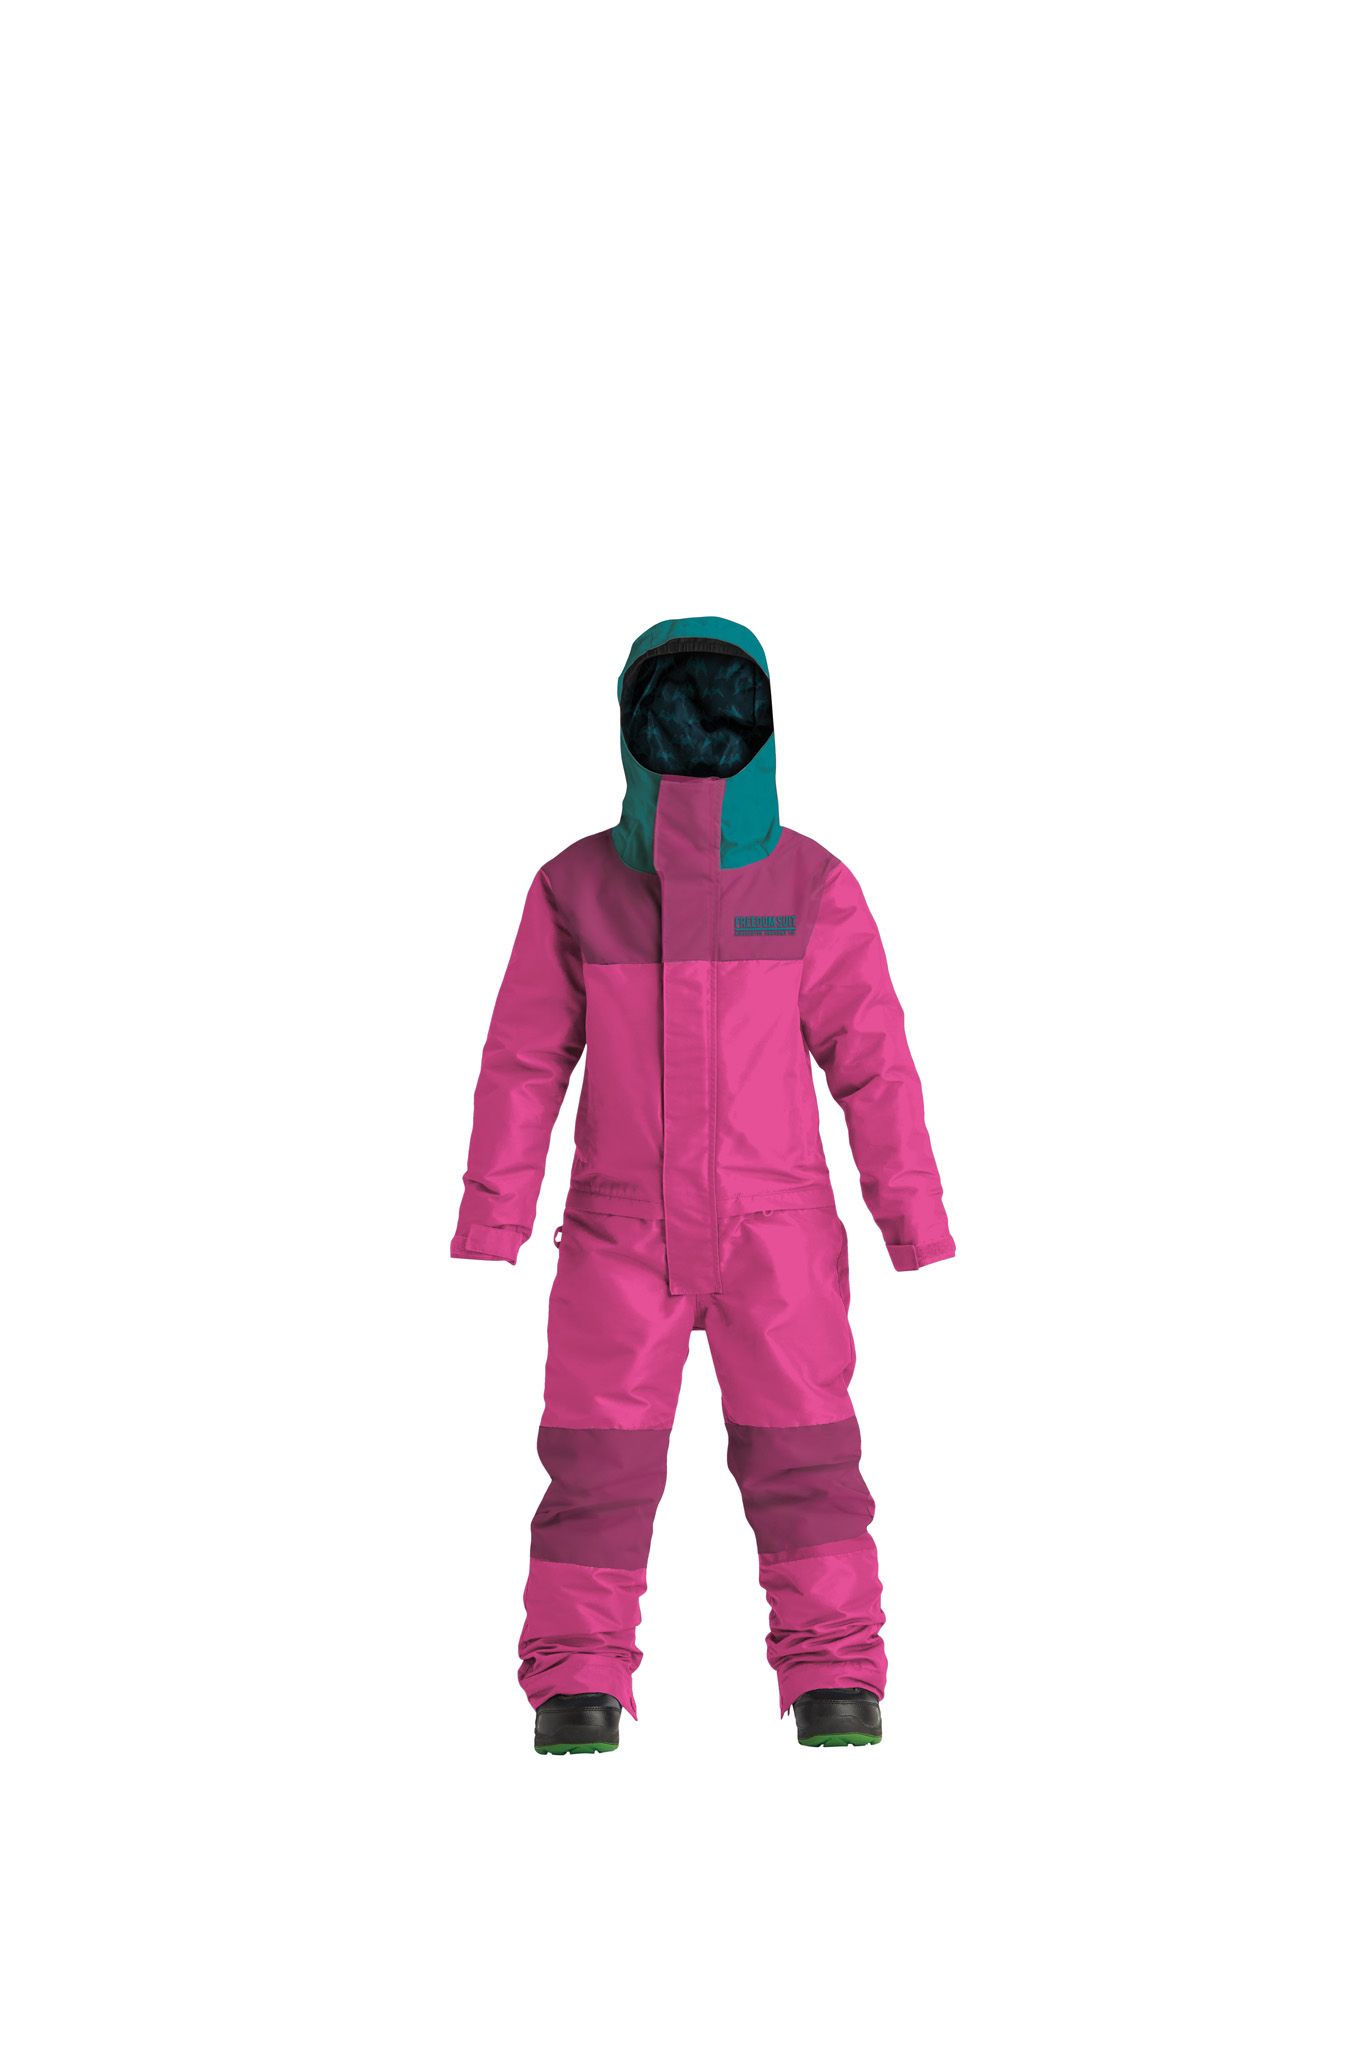 Airblaster Youth Freedom Suit kinder snowboardpak pink